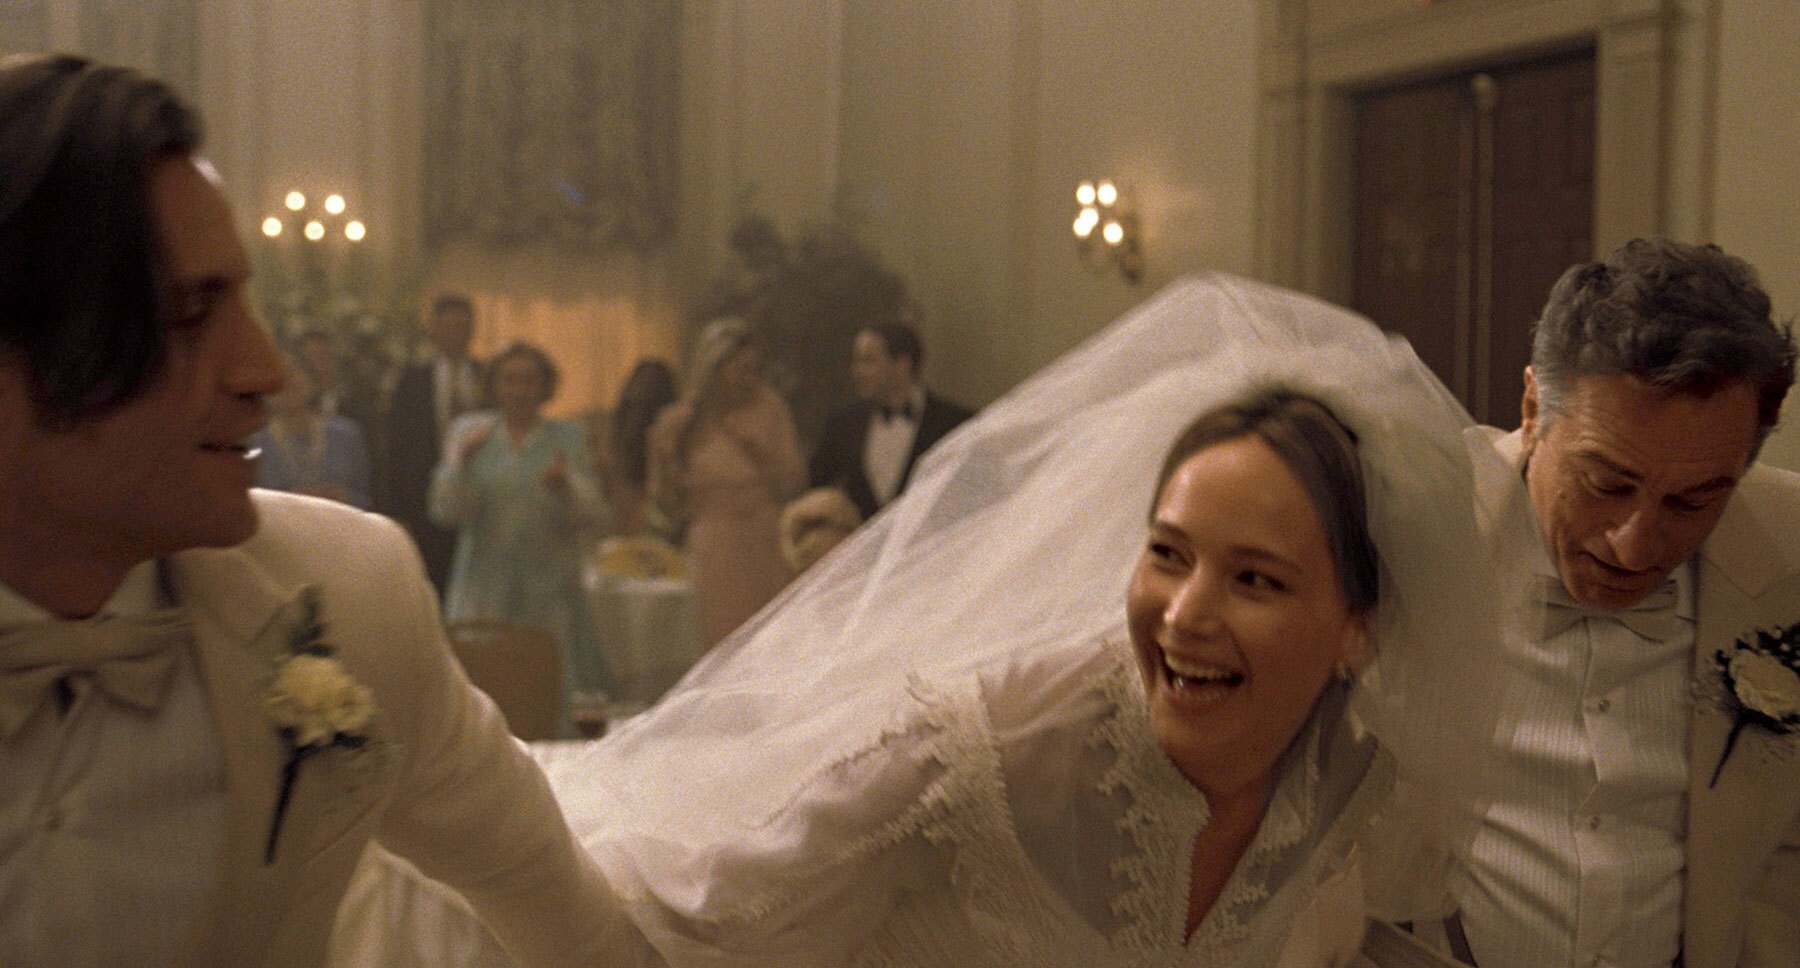 Robert De Niro (as Rudy), Edgar Ramírez (as Tony), and Jennifer Lawrence (as Joy) dancing at a wedding in "Joy"